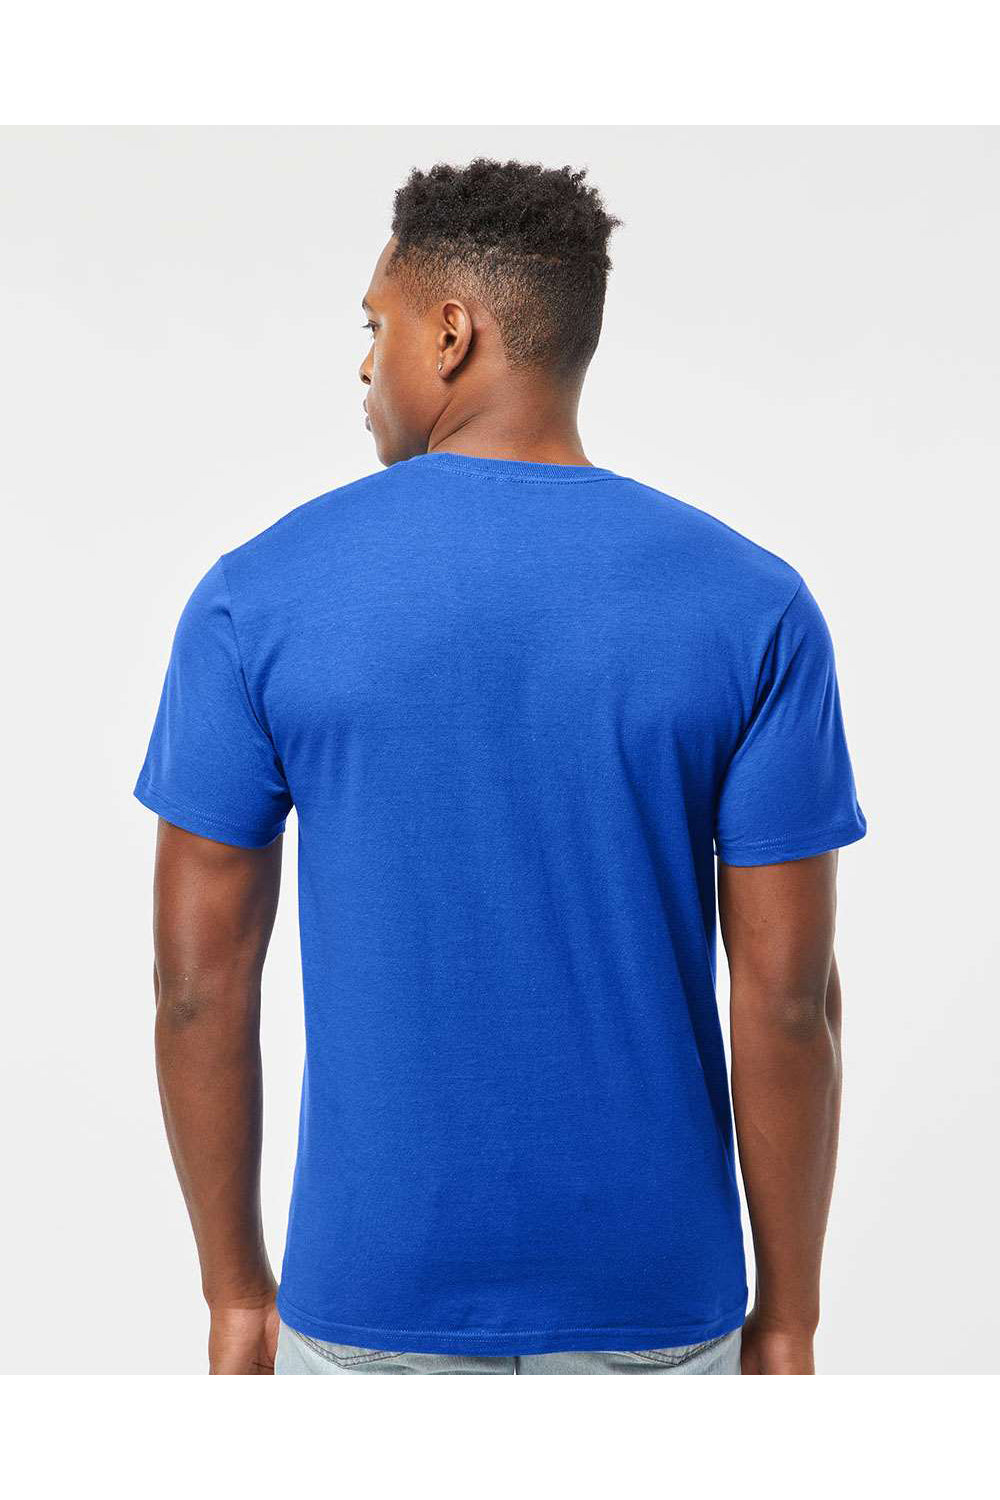 Tultex 290 Mens Jersey Short Sleeve Crewneck T-Shirt Royal Blue Model Back